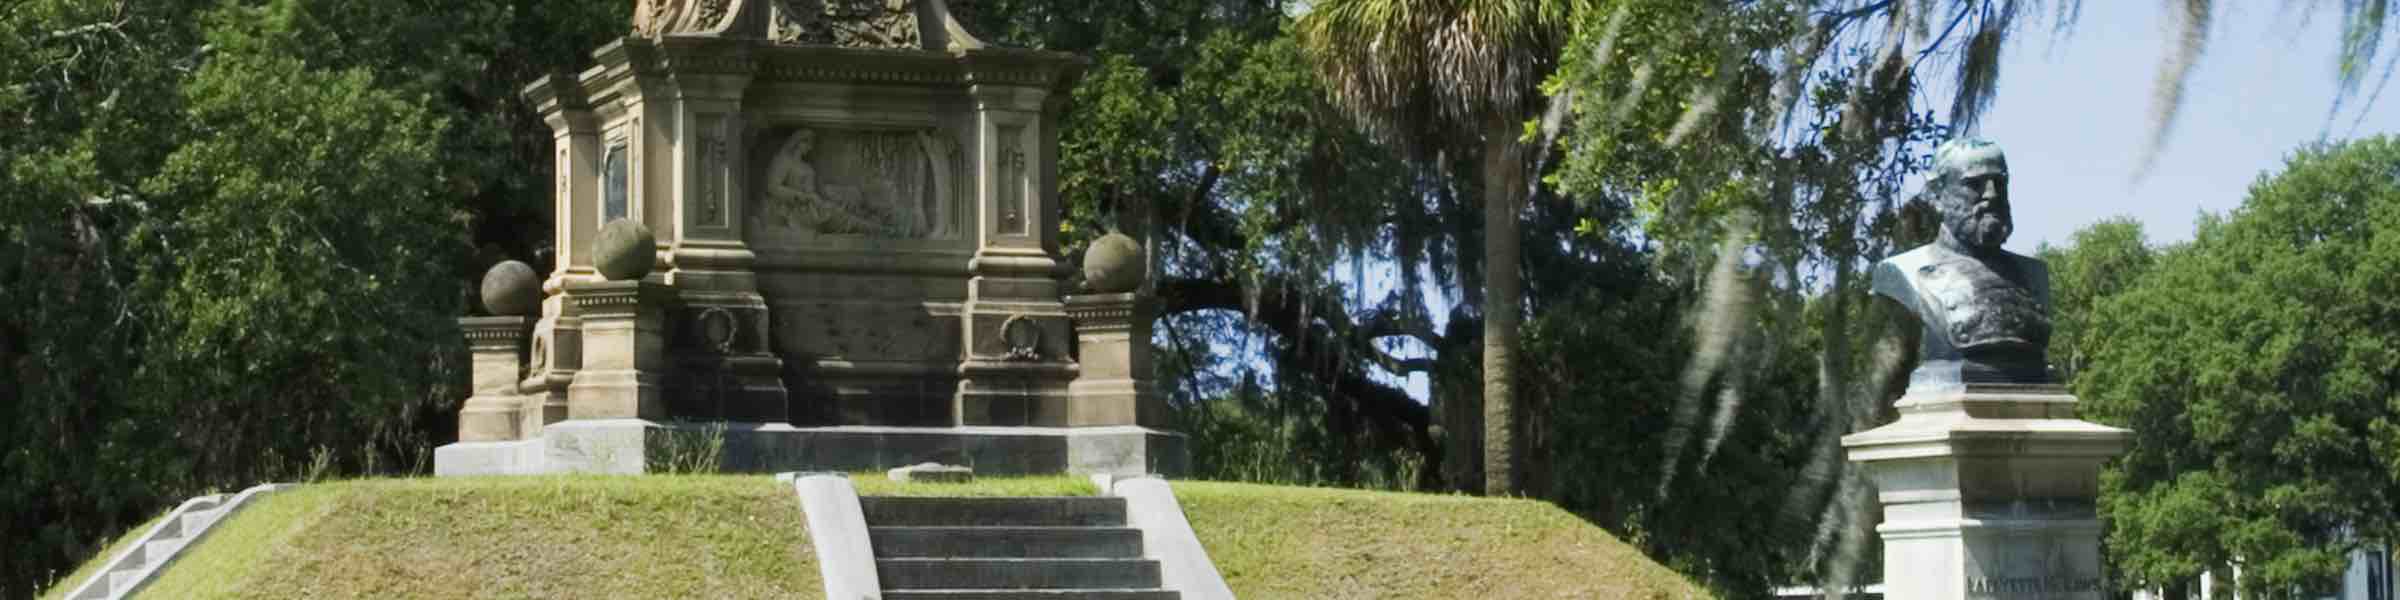 The Confederate Monument in Forsyth Park, Savannah, GA.